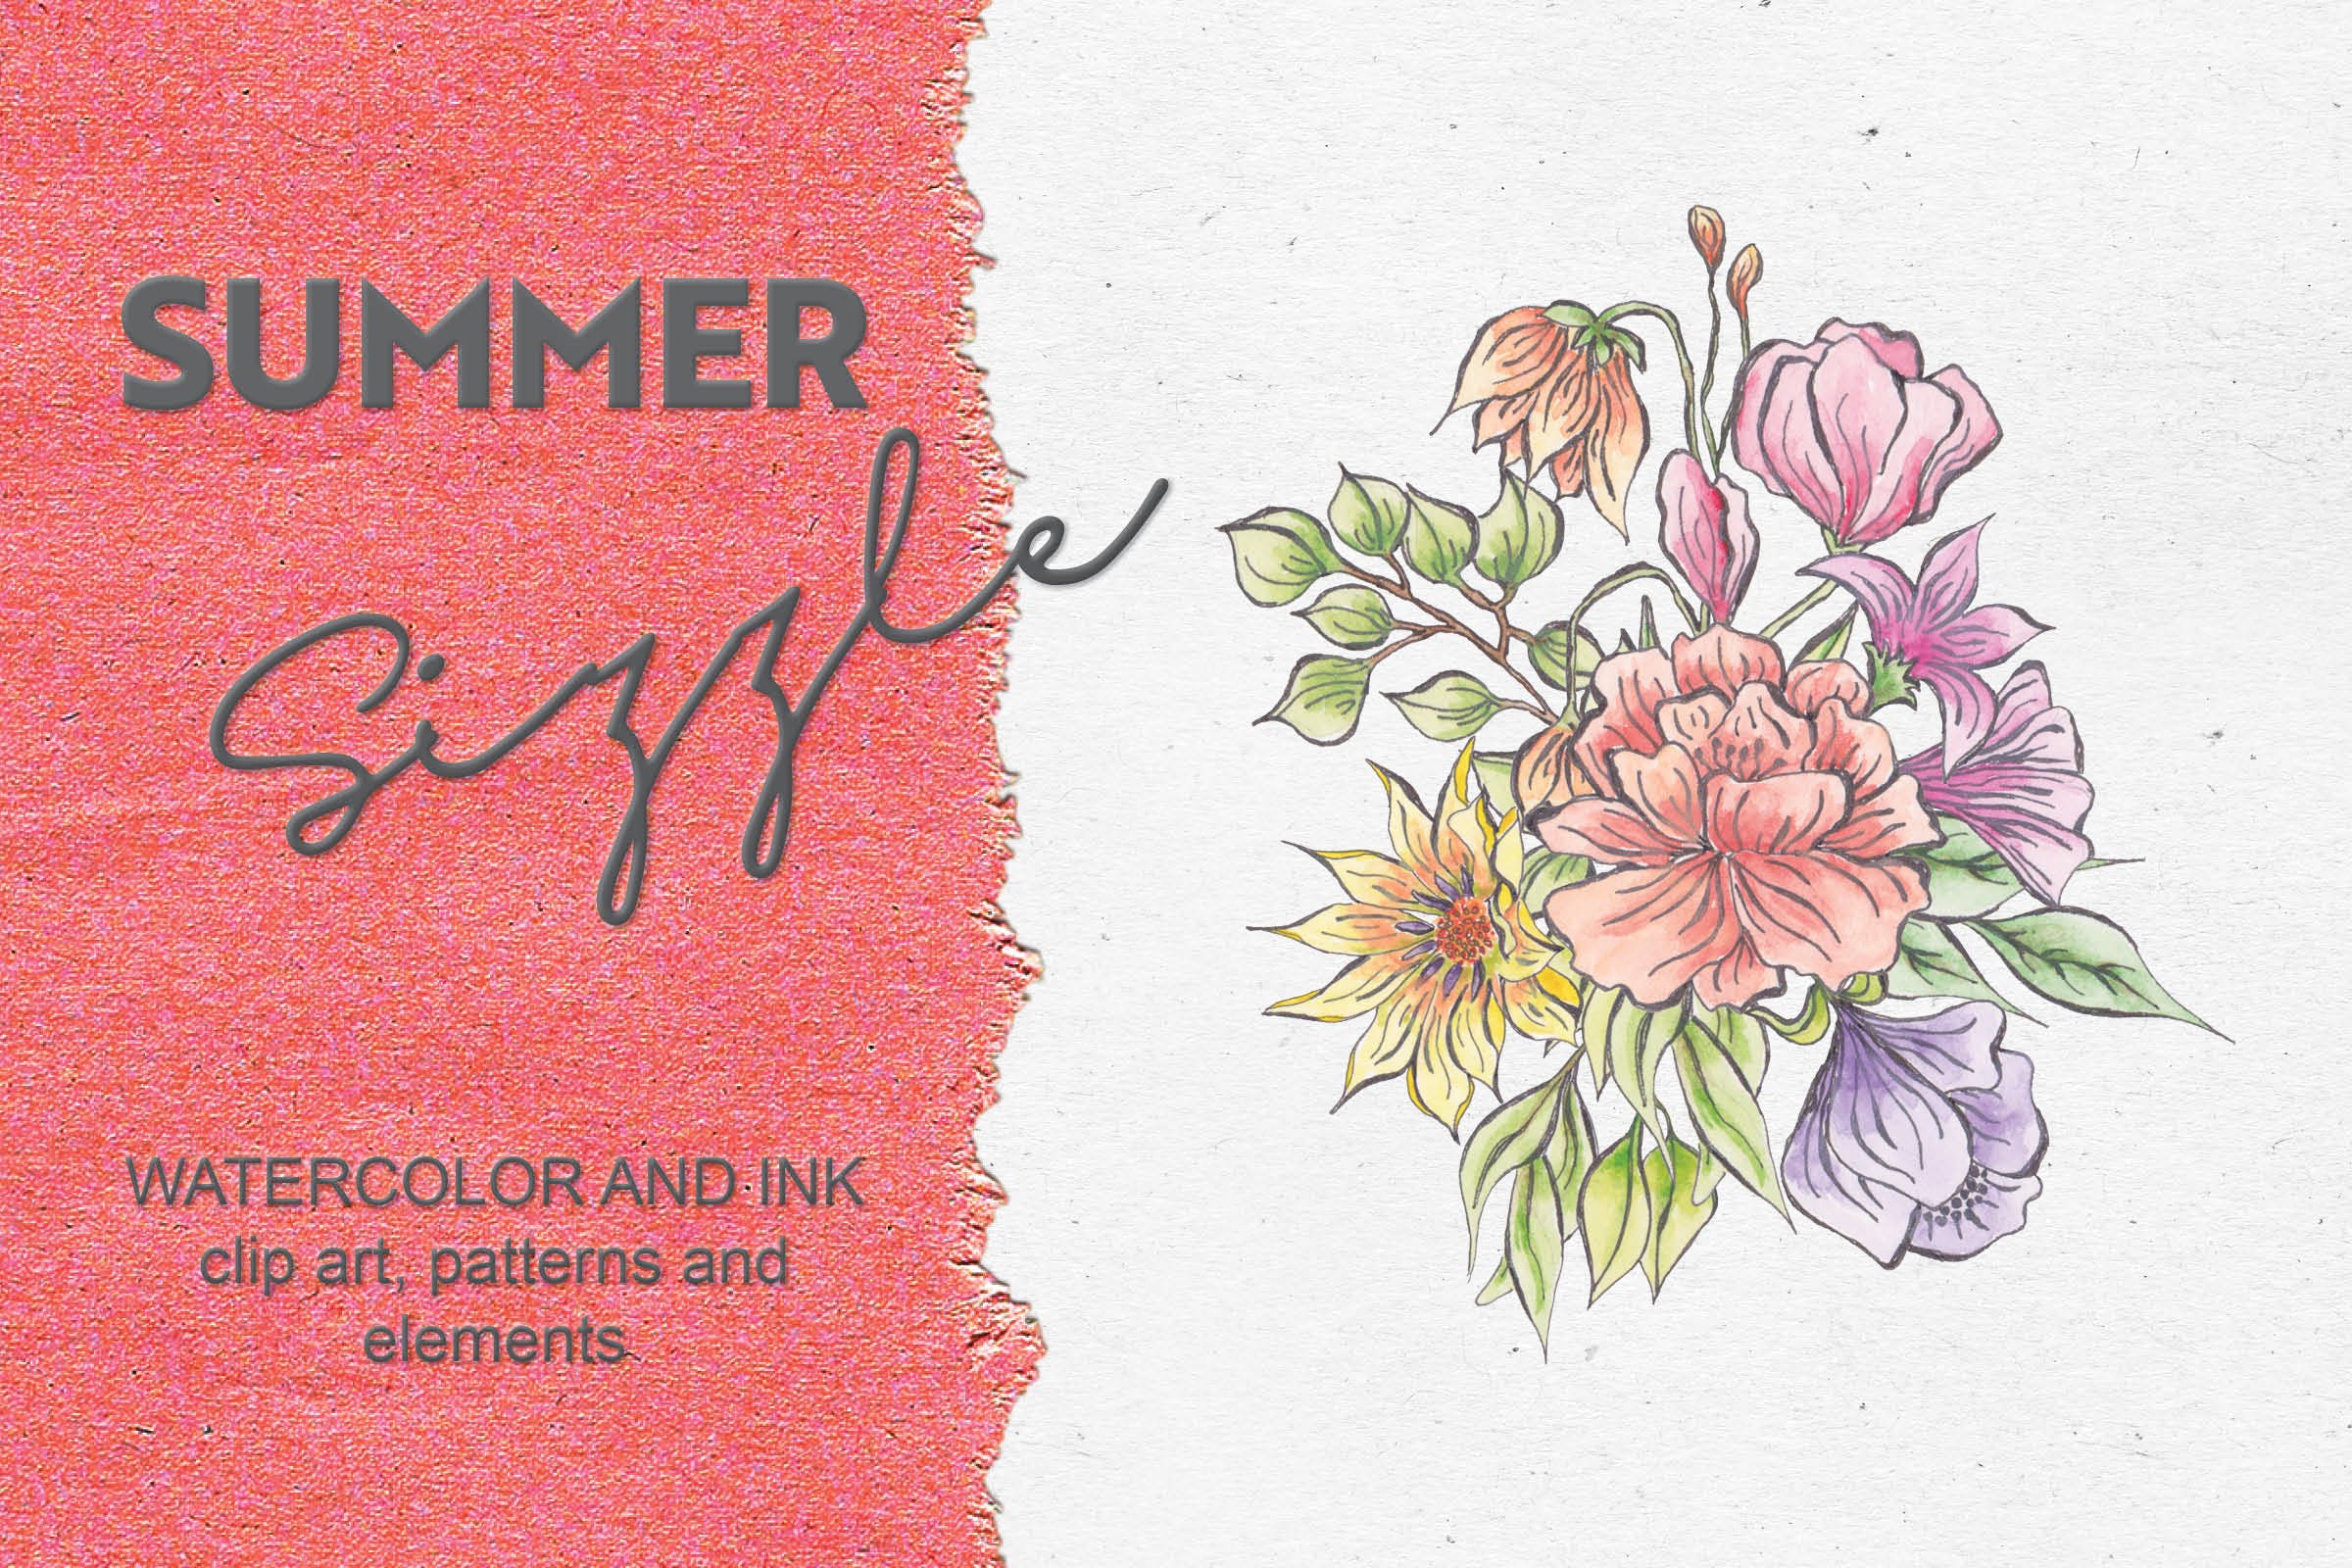 夏日鲜艳色彩水彩花卉设计蚂蚁素材精选PNG素材包 Summer Sizzle: Watercolor and Ink Collection插图